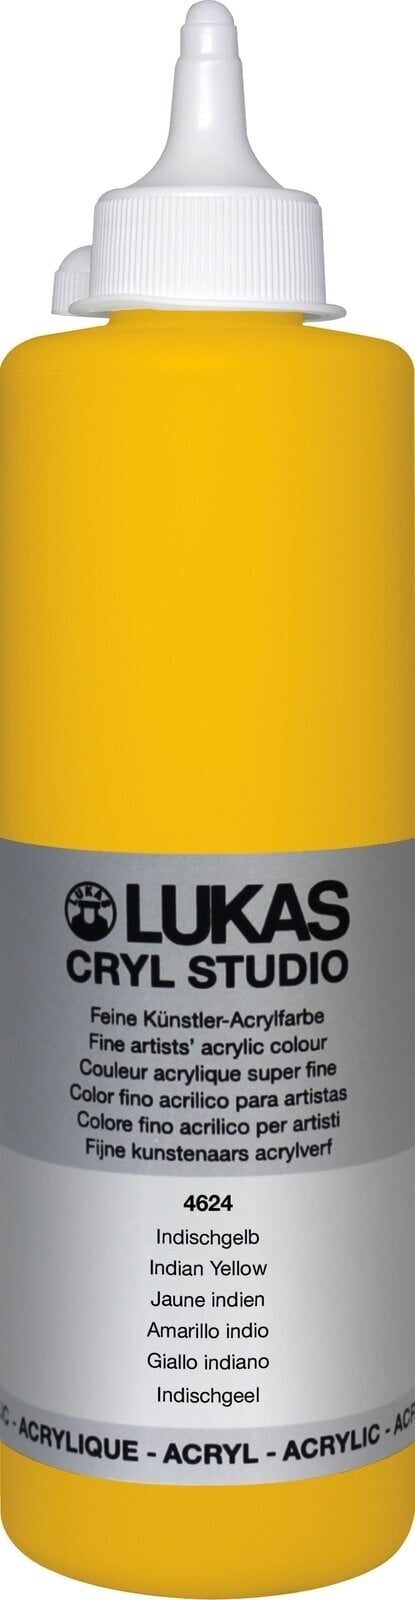 Acrylic Paint Lukas Cryl Studio Acrylic Paint Plastic Bottle Acrylic Paint Indian Yellow 500 ml 1 pc